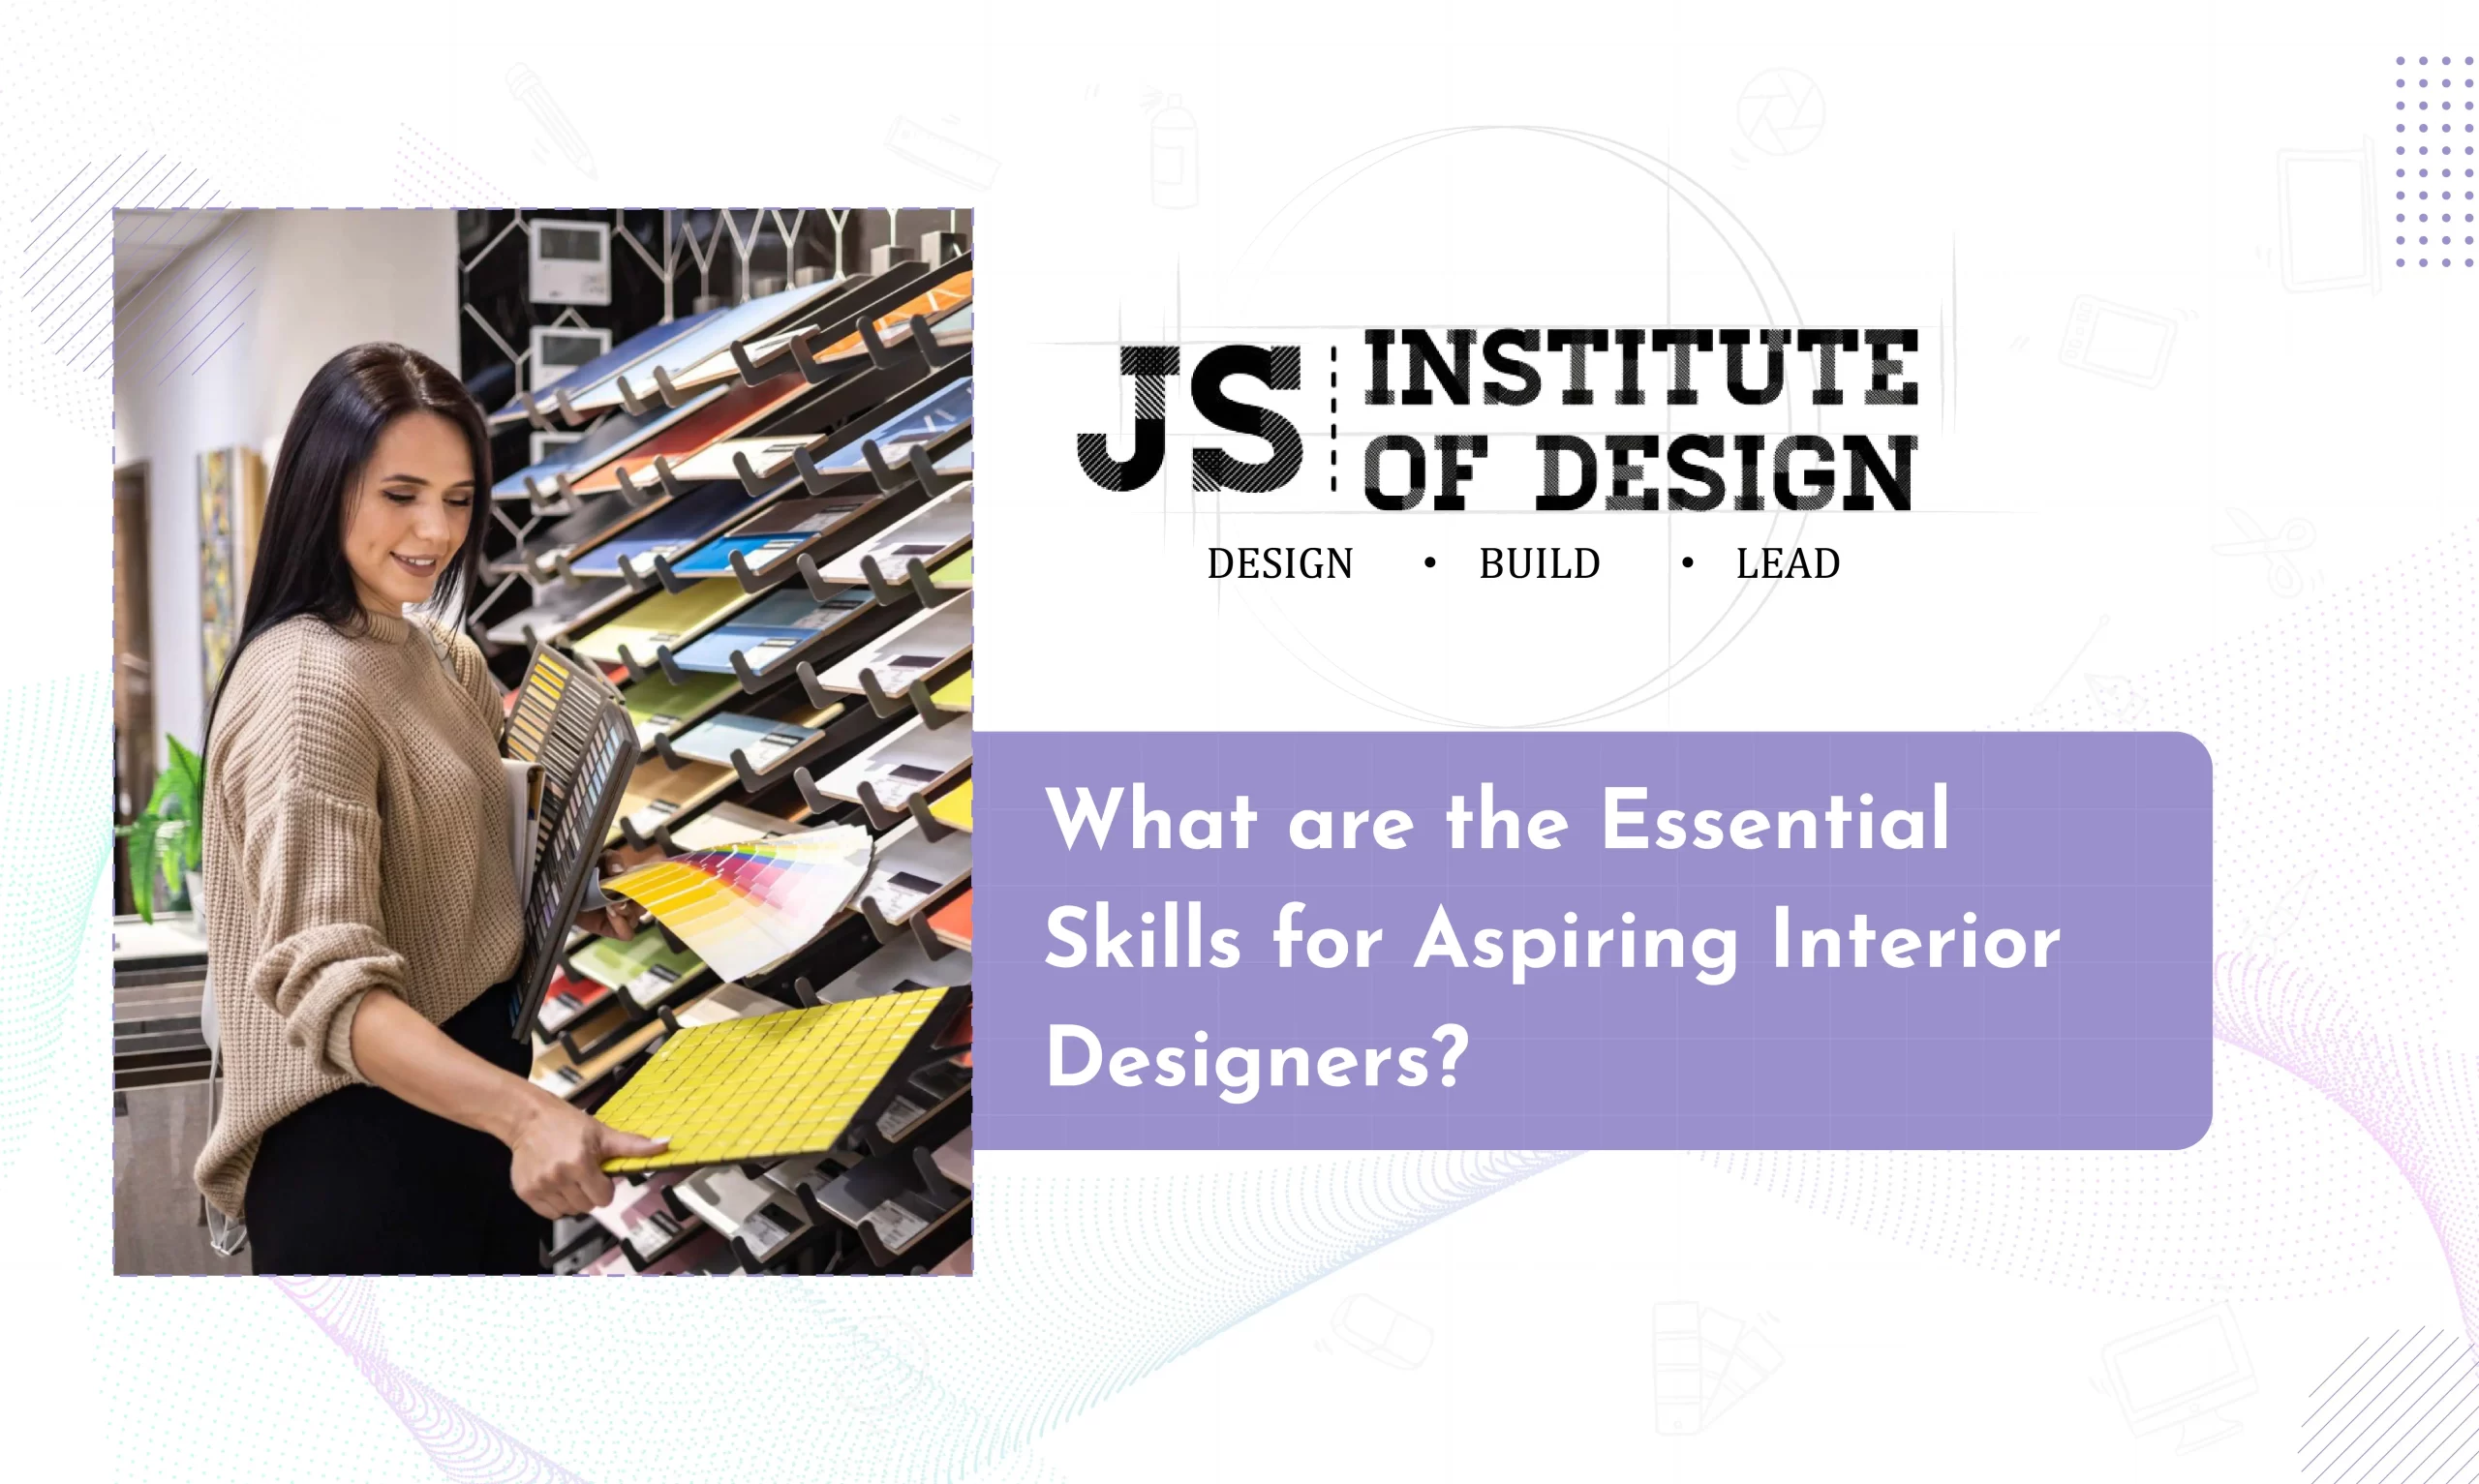 What are the Essential Skills for Aspiring Interior Designers?